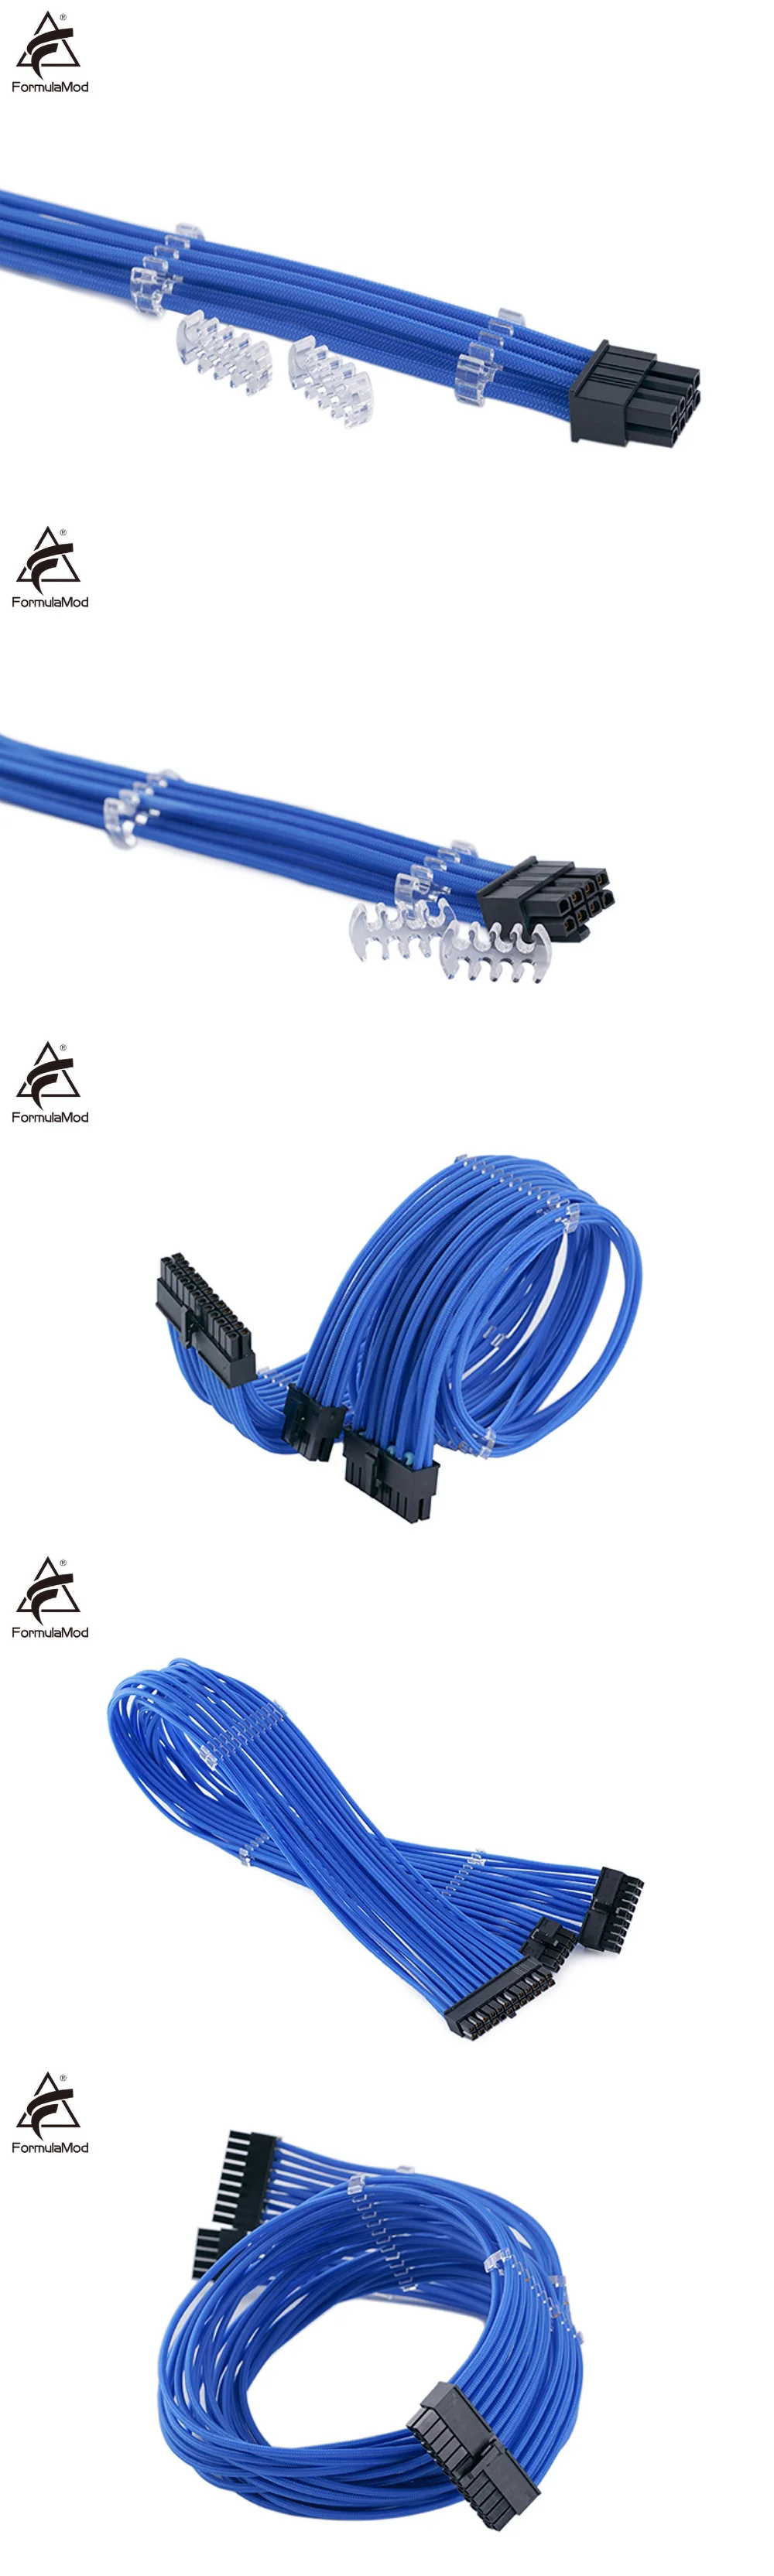 FormulaMod CORSAIR Fully Modular PSU Cable Kit, 18AWG Sleeved, Kit For Corsair Modular PSU, Fm-BZXZ [Please check compatibility]  